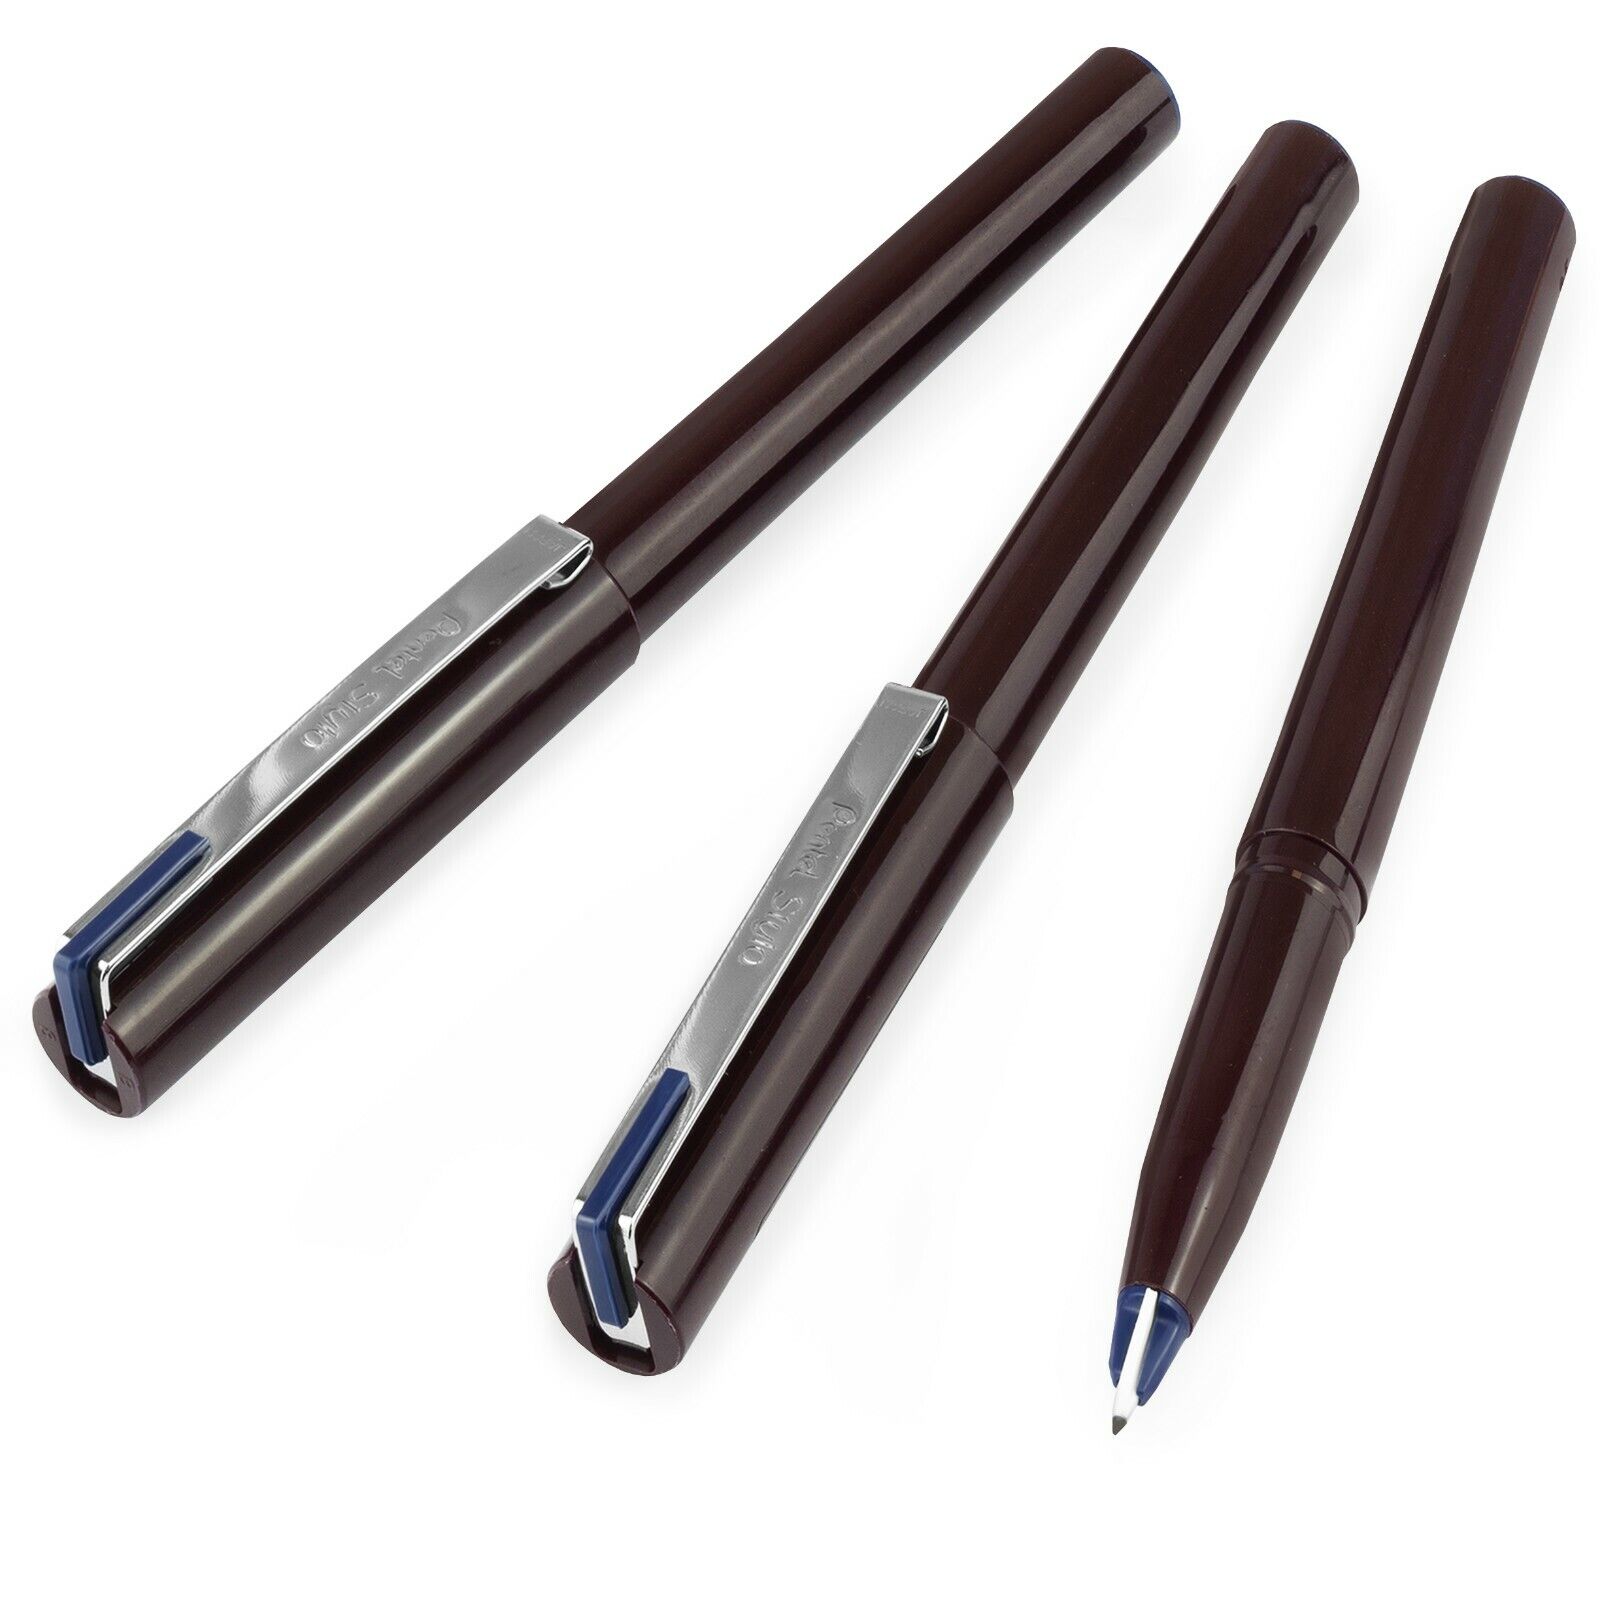 Pentel JM20 Stylo Disposable Fountain Pen – Navy Blue Ink - Pack of 3